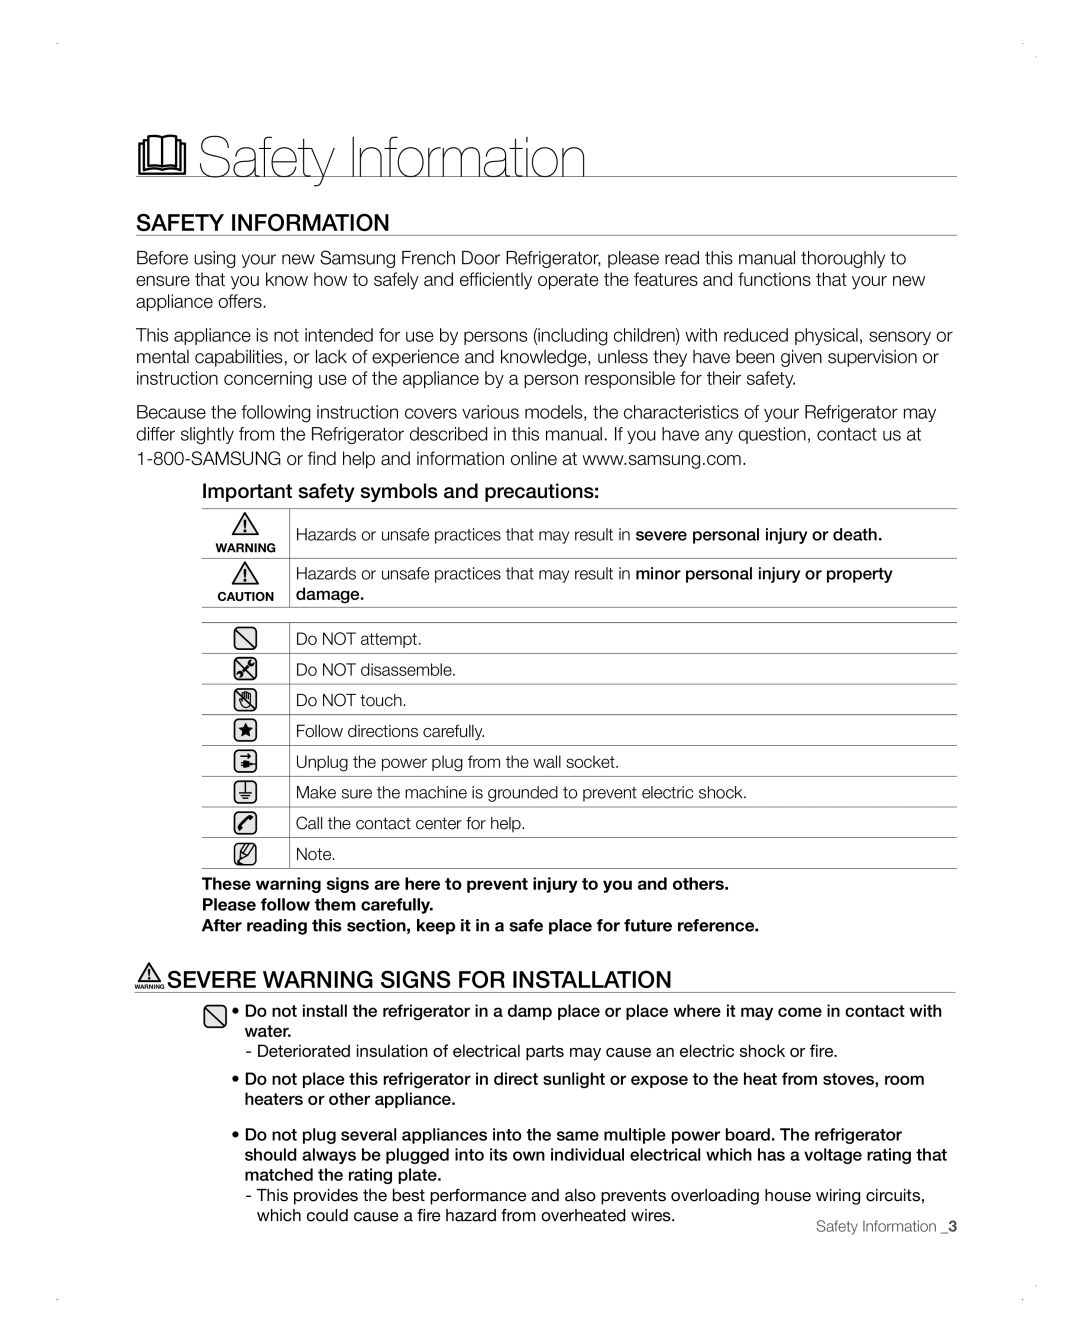 Samsung RFG298AARS user manual Safety Information, Warning Severe Warning Signs For Installation 